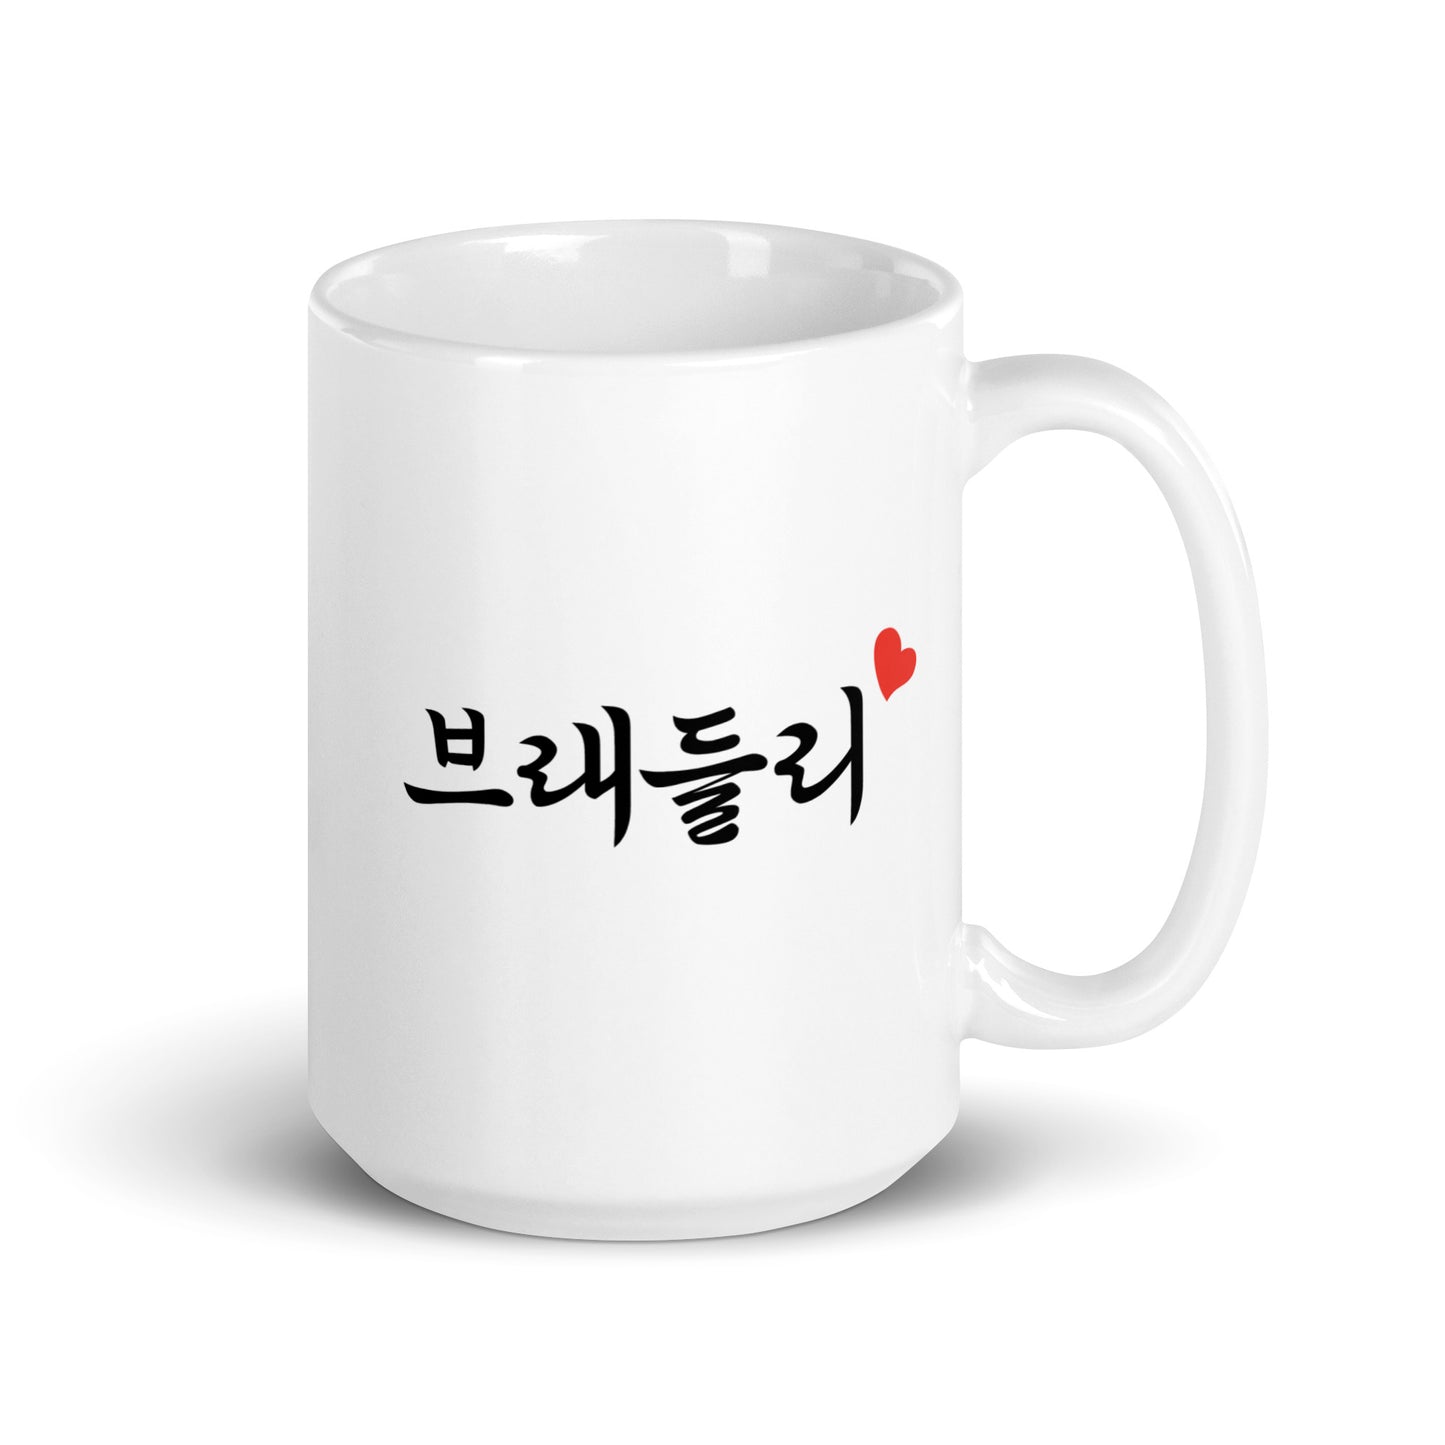 Bradley in Hangul Custom Name Gift Ceramic Mug